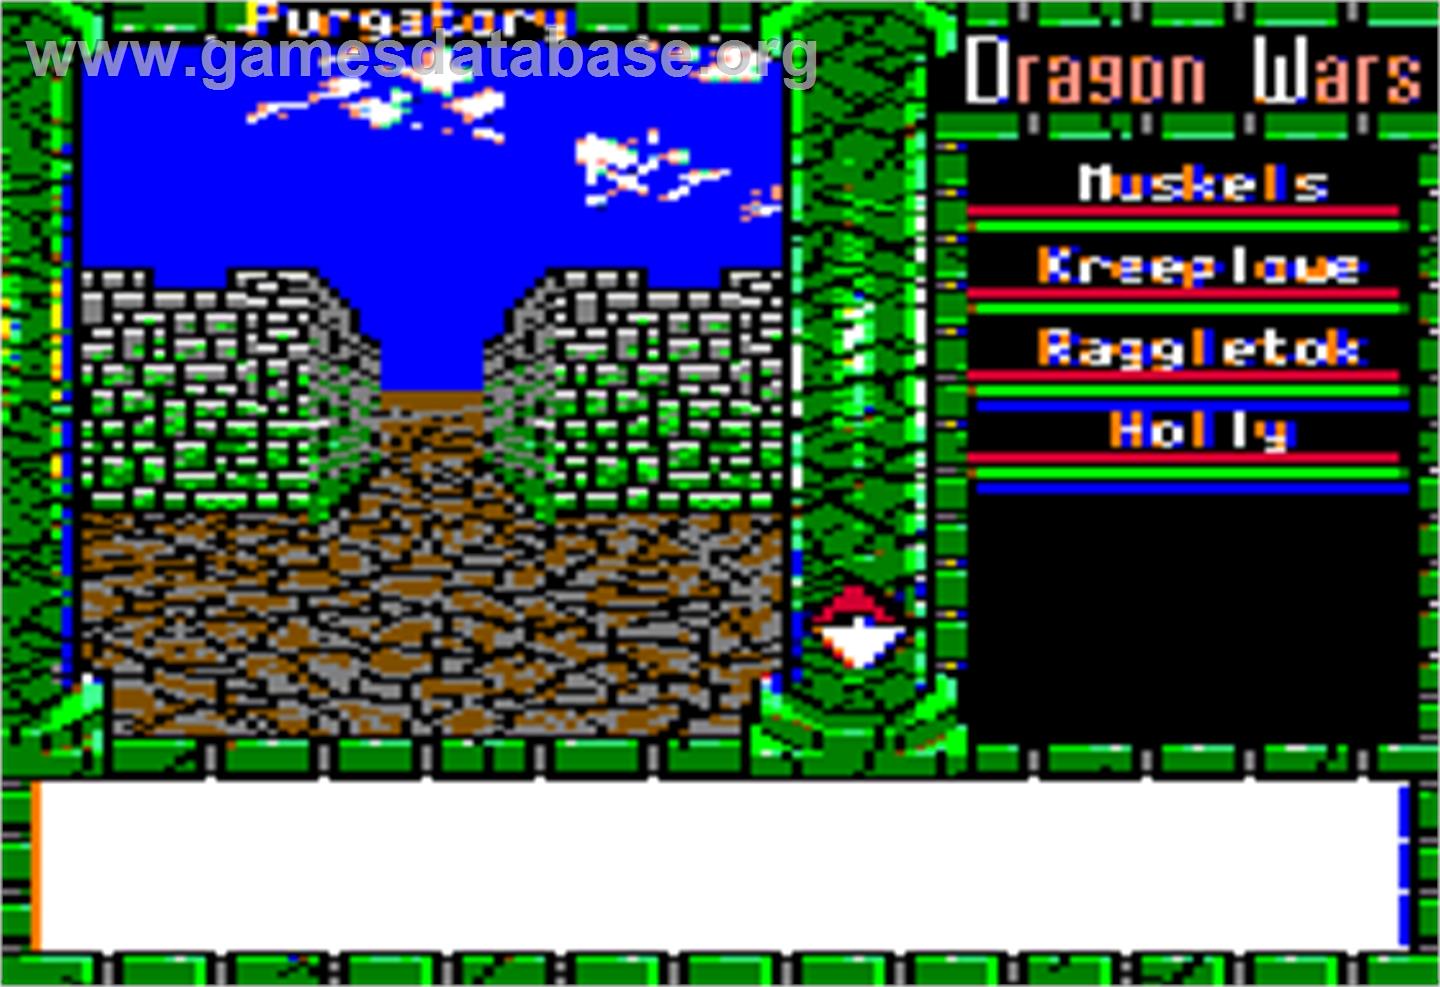 Dragon Wars - Apple II - Artwork - In Game